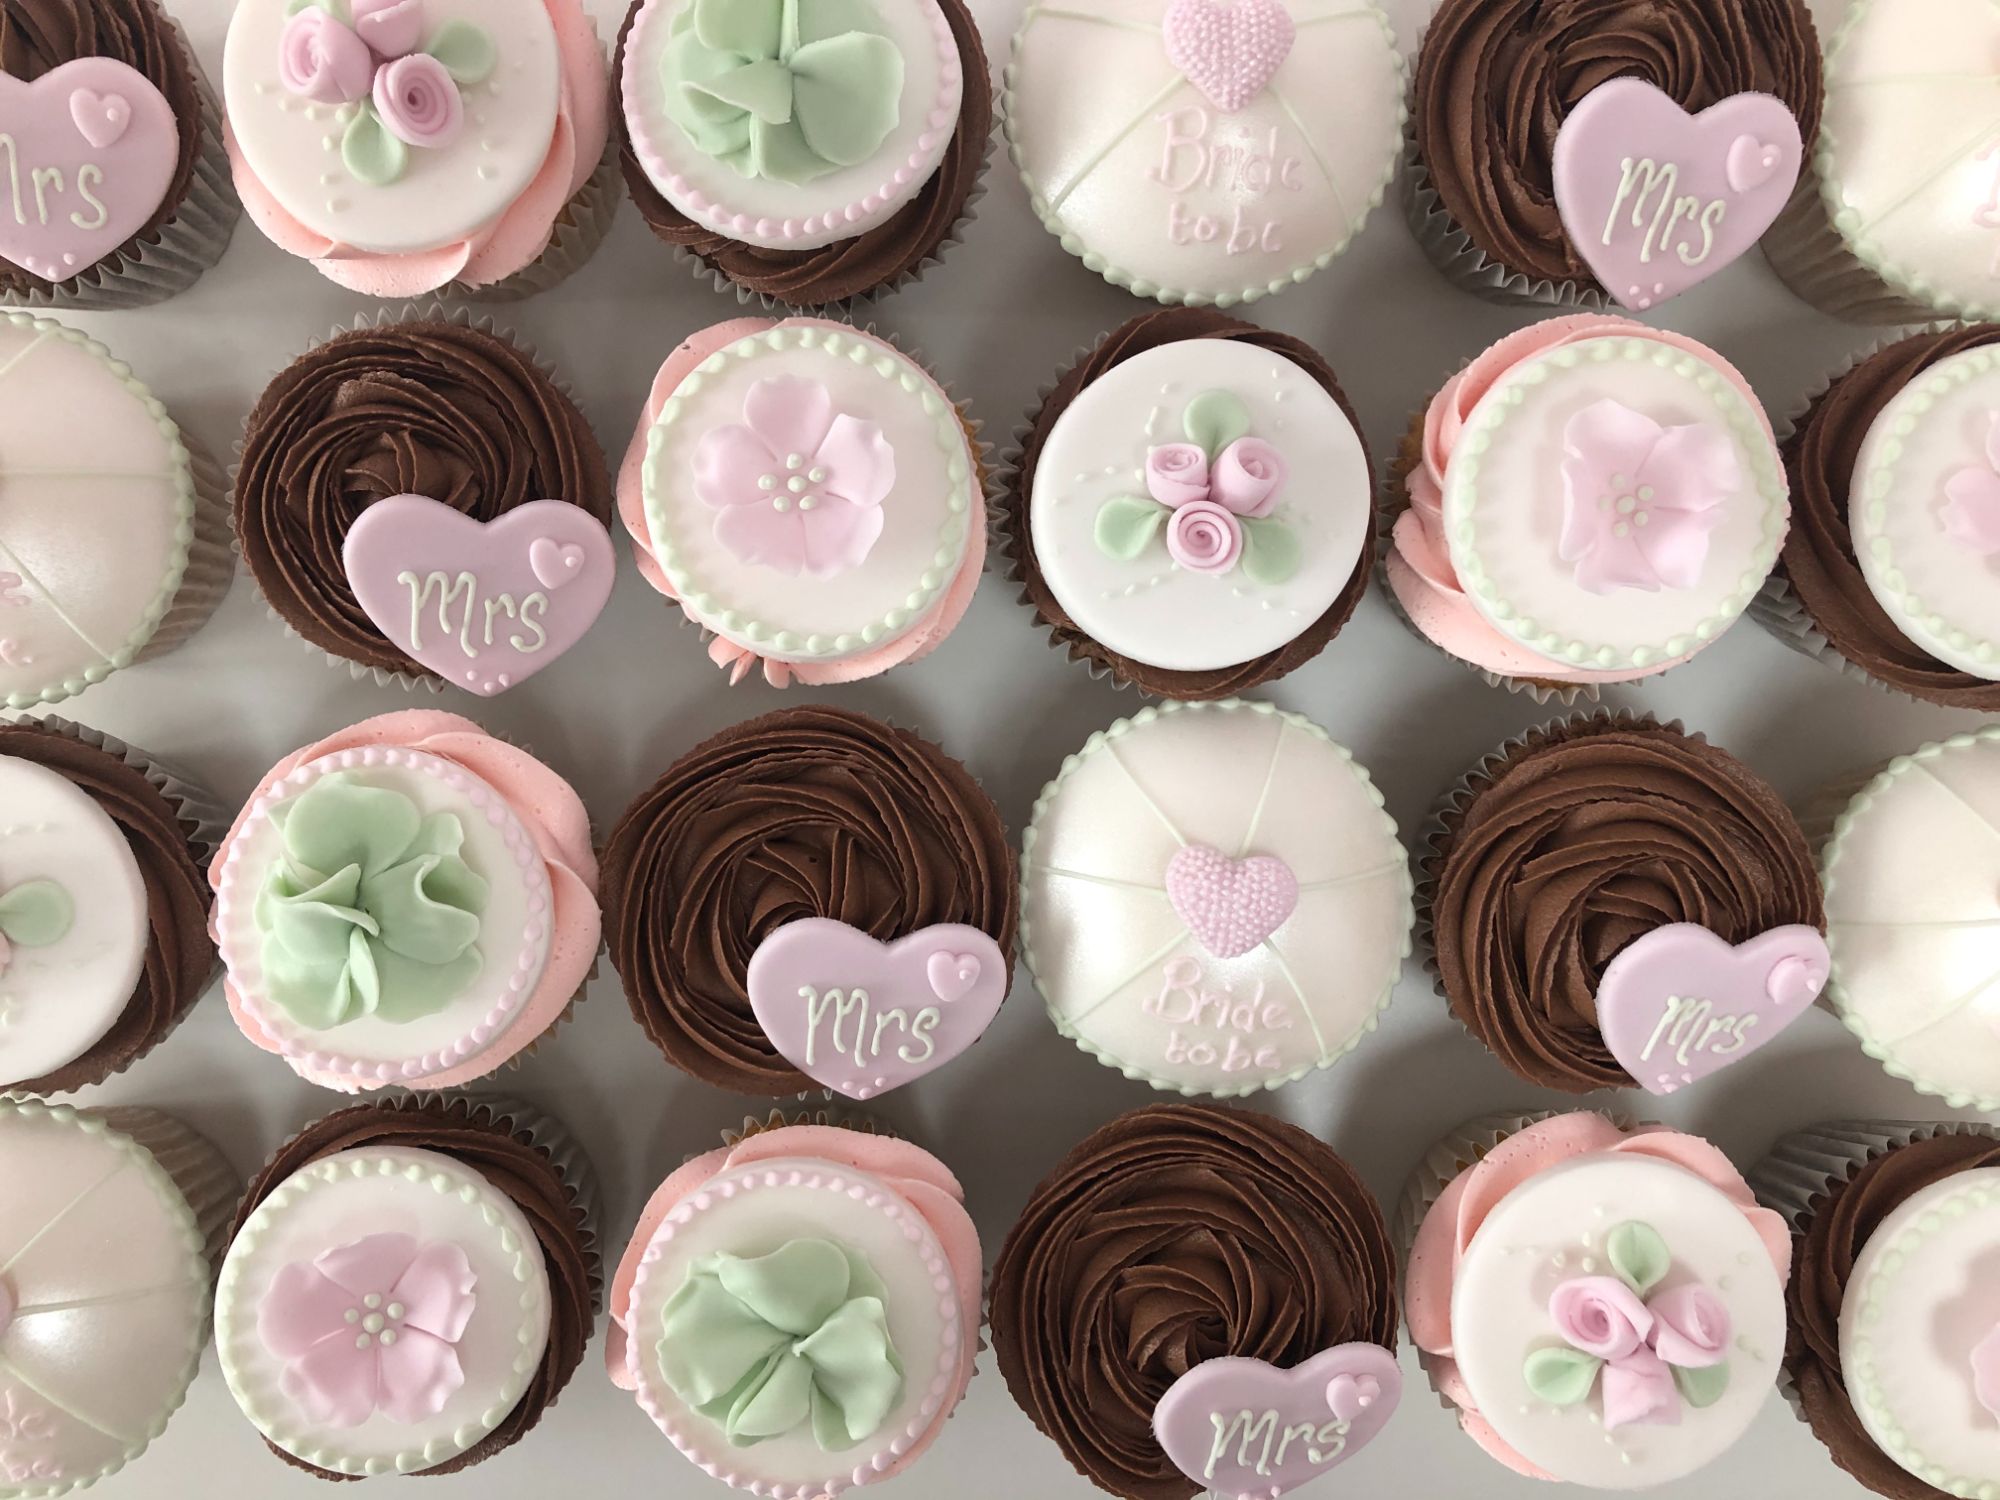 Helen Jane Cake Design, Christchurch, Dorset - cupcakes (7)